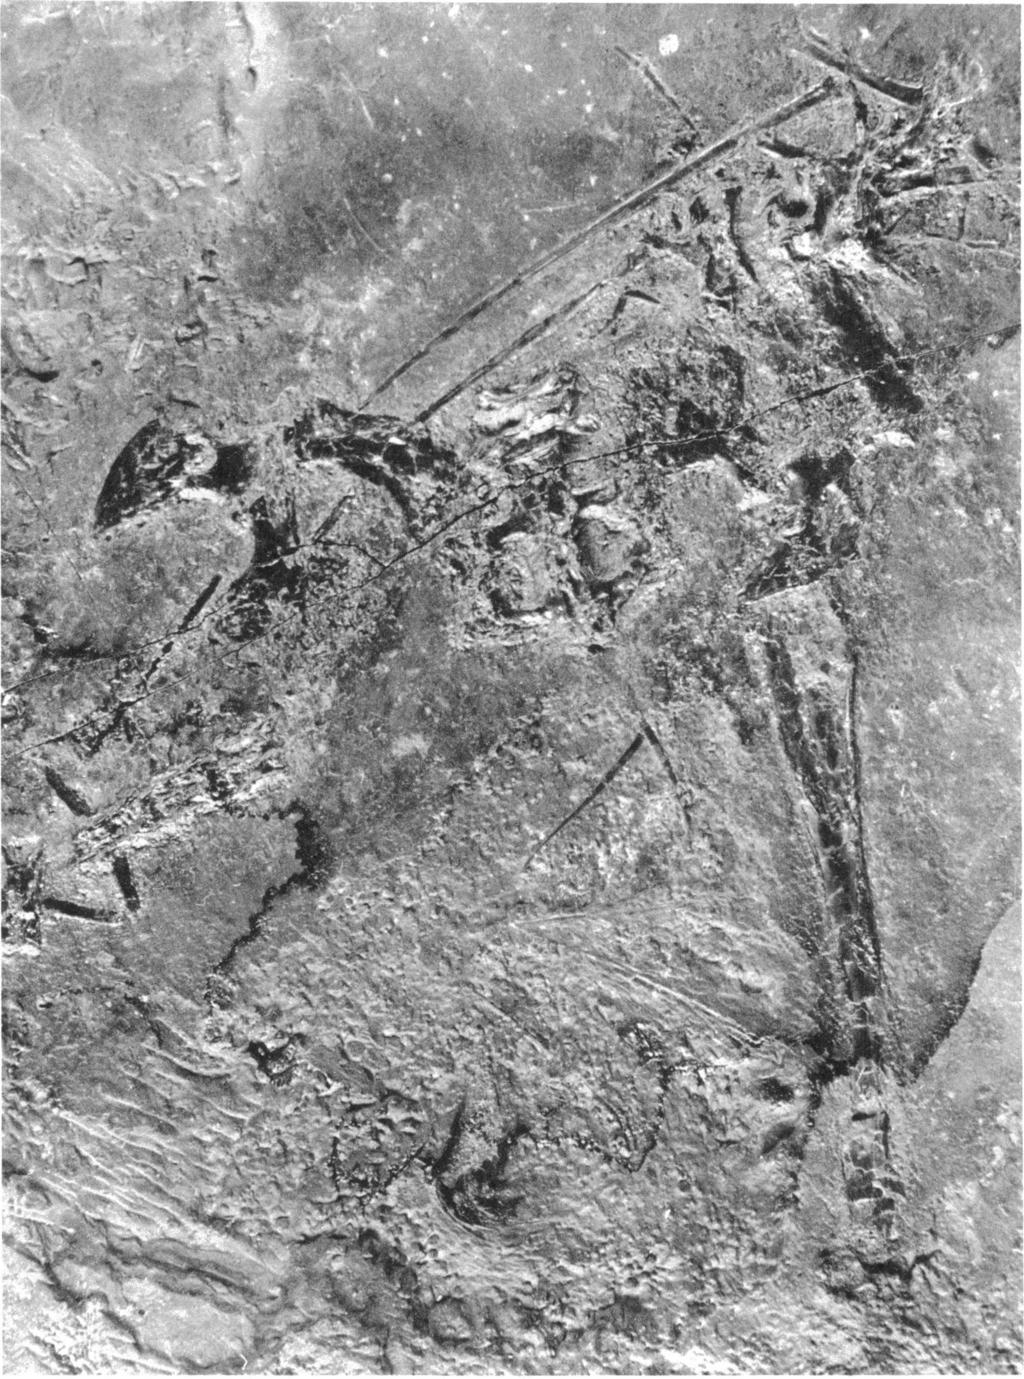 16 AMERICAN MUSEUM NOVITATES NO. 2246 N6 j! FIG. 9. Icarosaurus siejkeri new genus and new species, posterior portion of skeleton. X 2. engulf the obturator foramen.